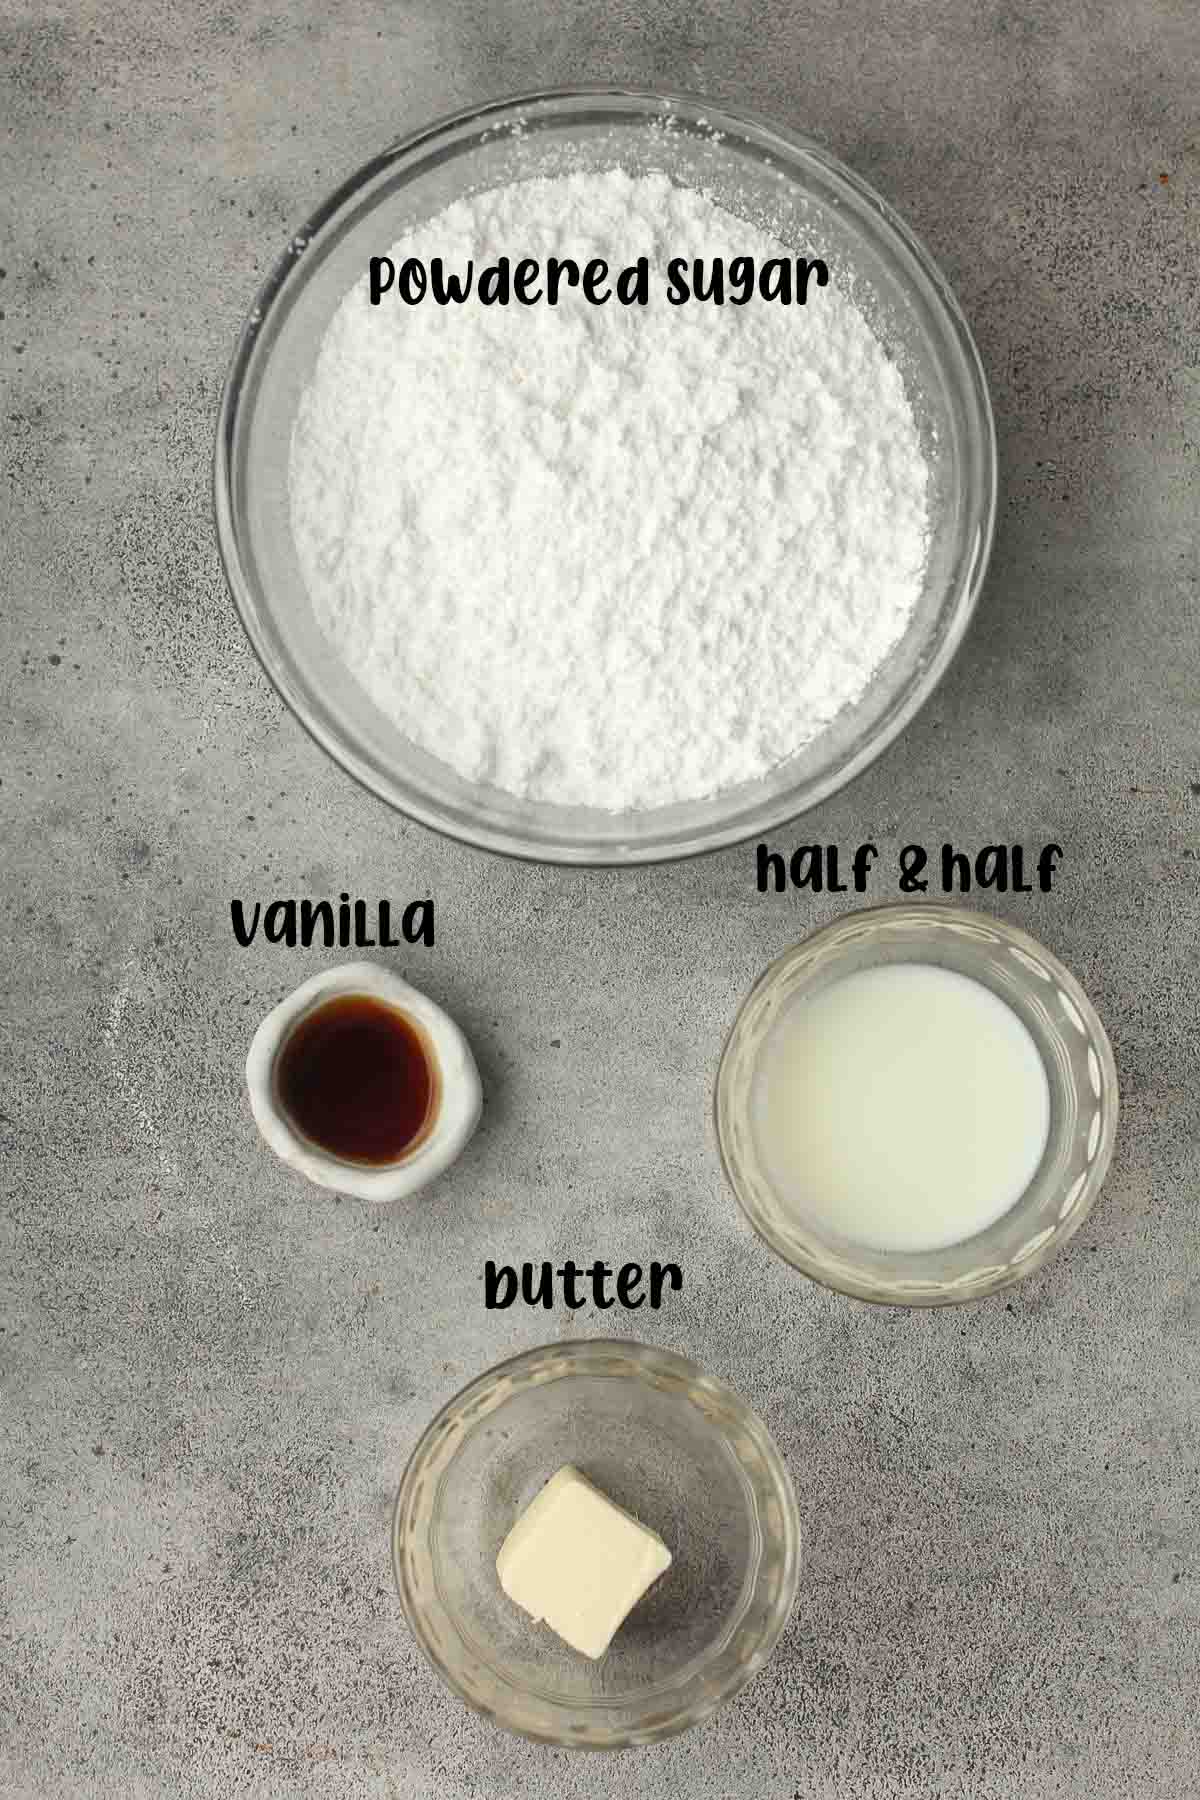 The powdered sugar frosting ingredients.